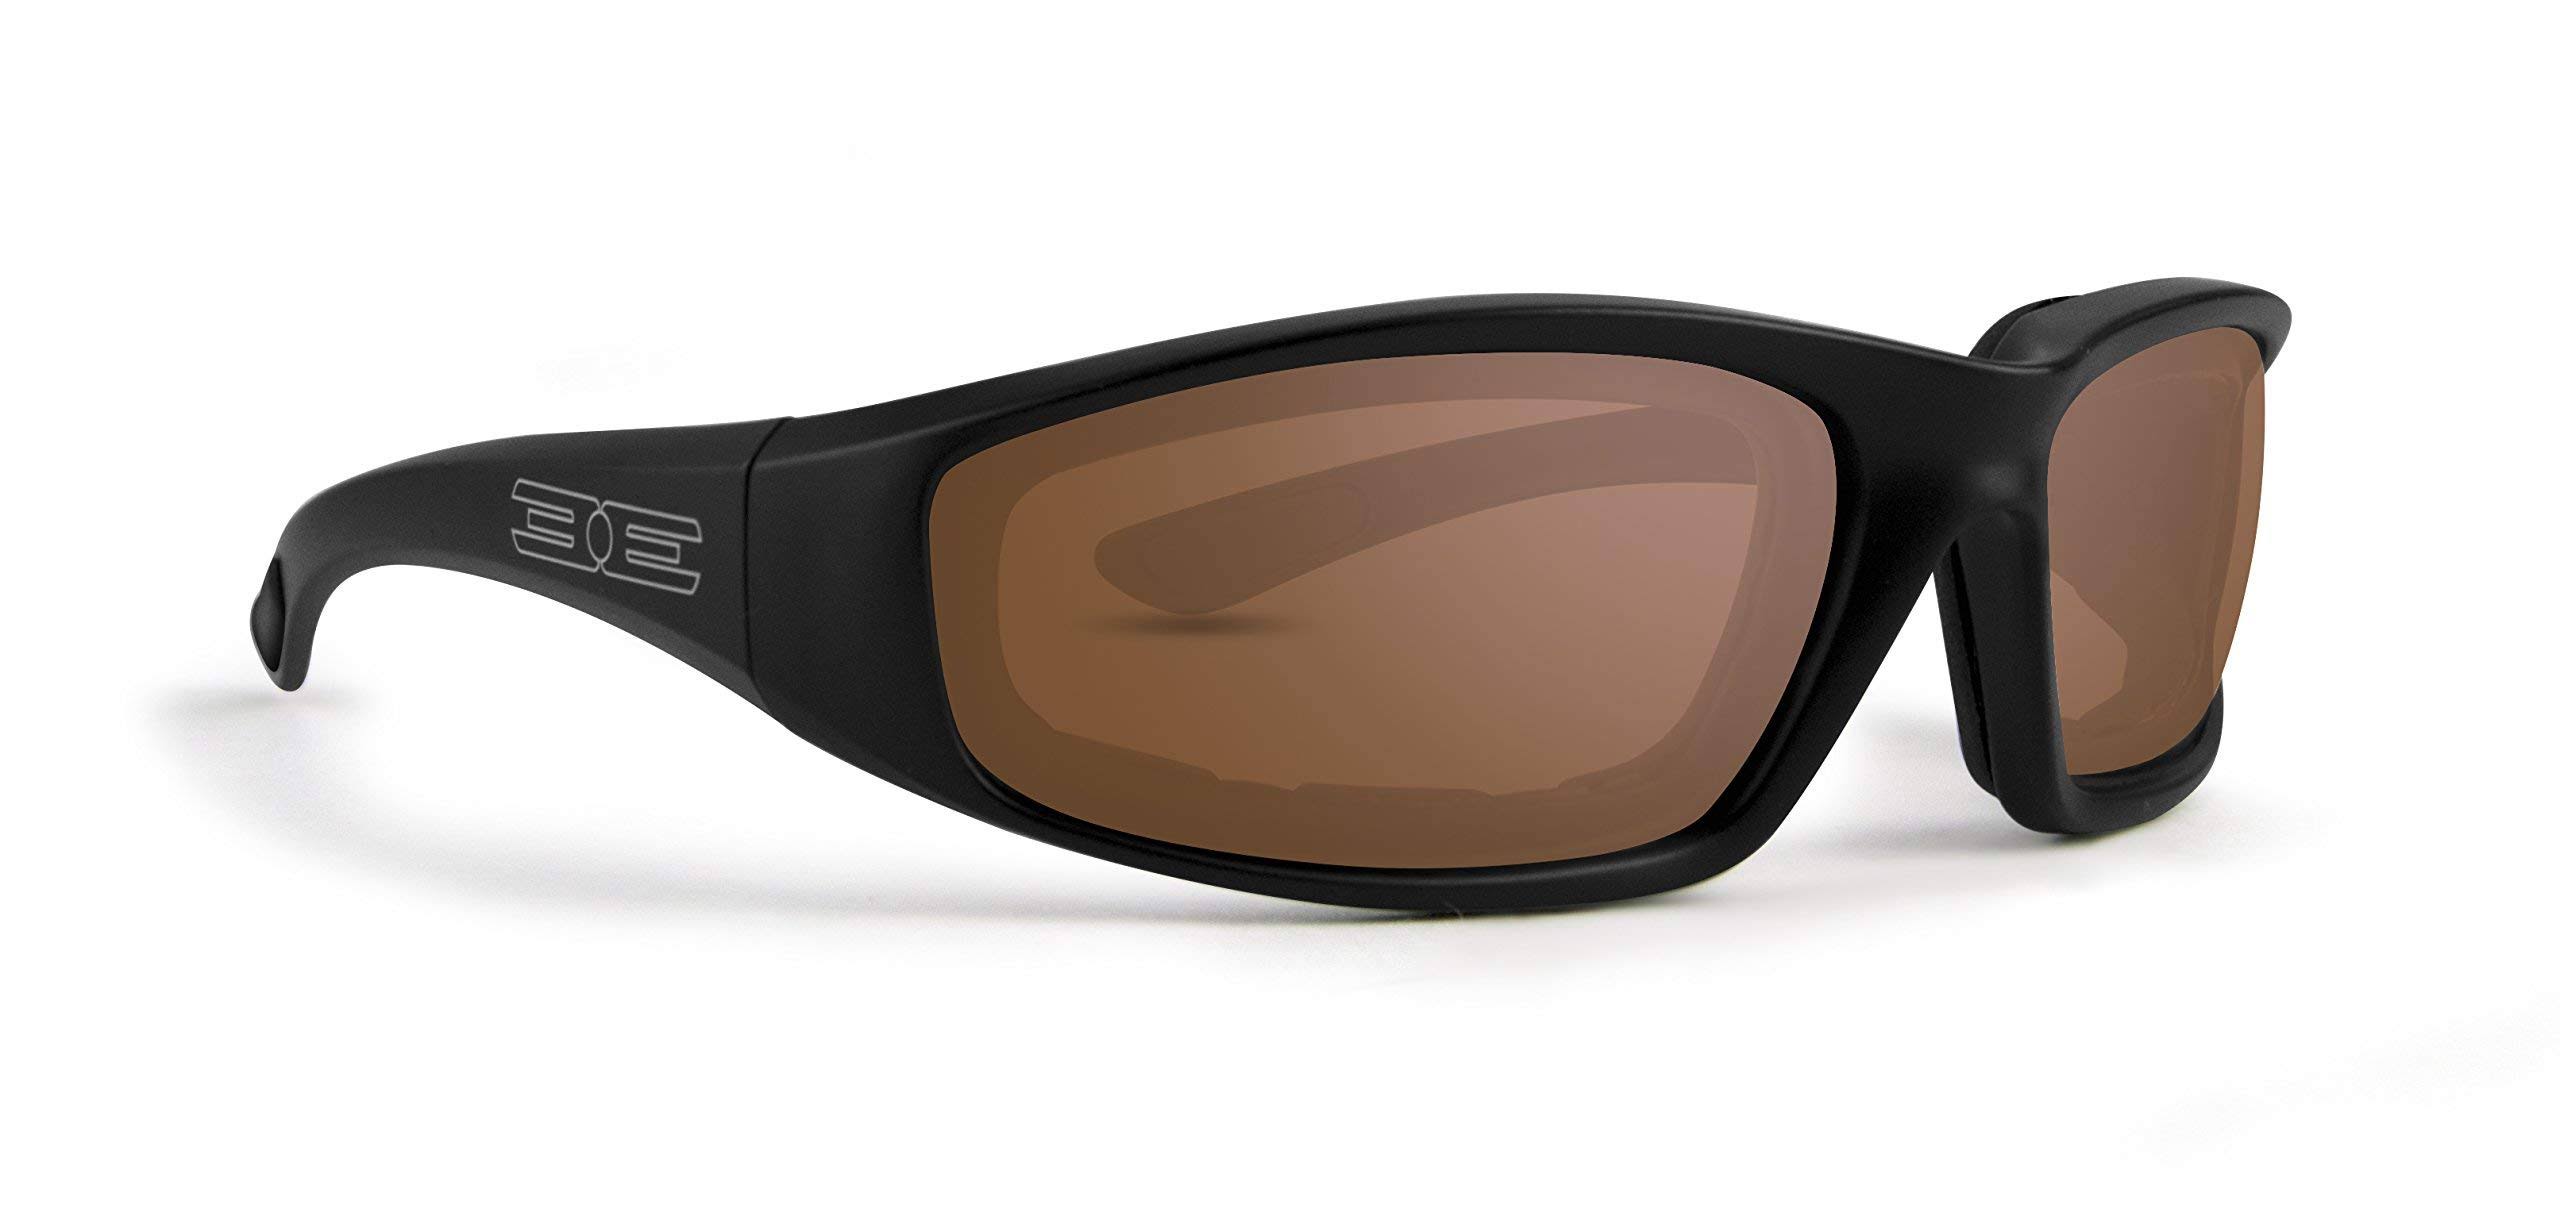 Epoch Foam Padded Motorcycle Sunglasses - Black, Amber Lenses